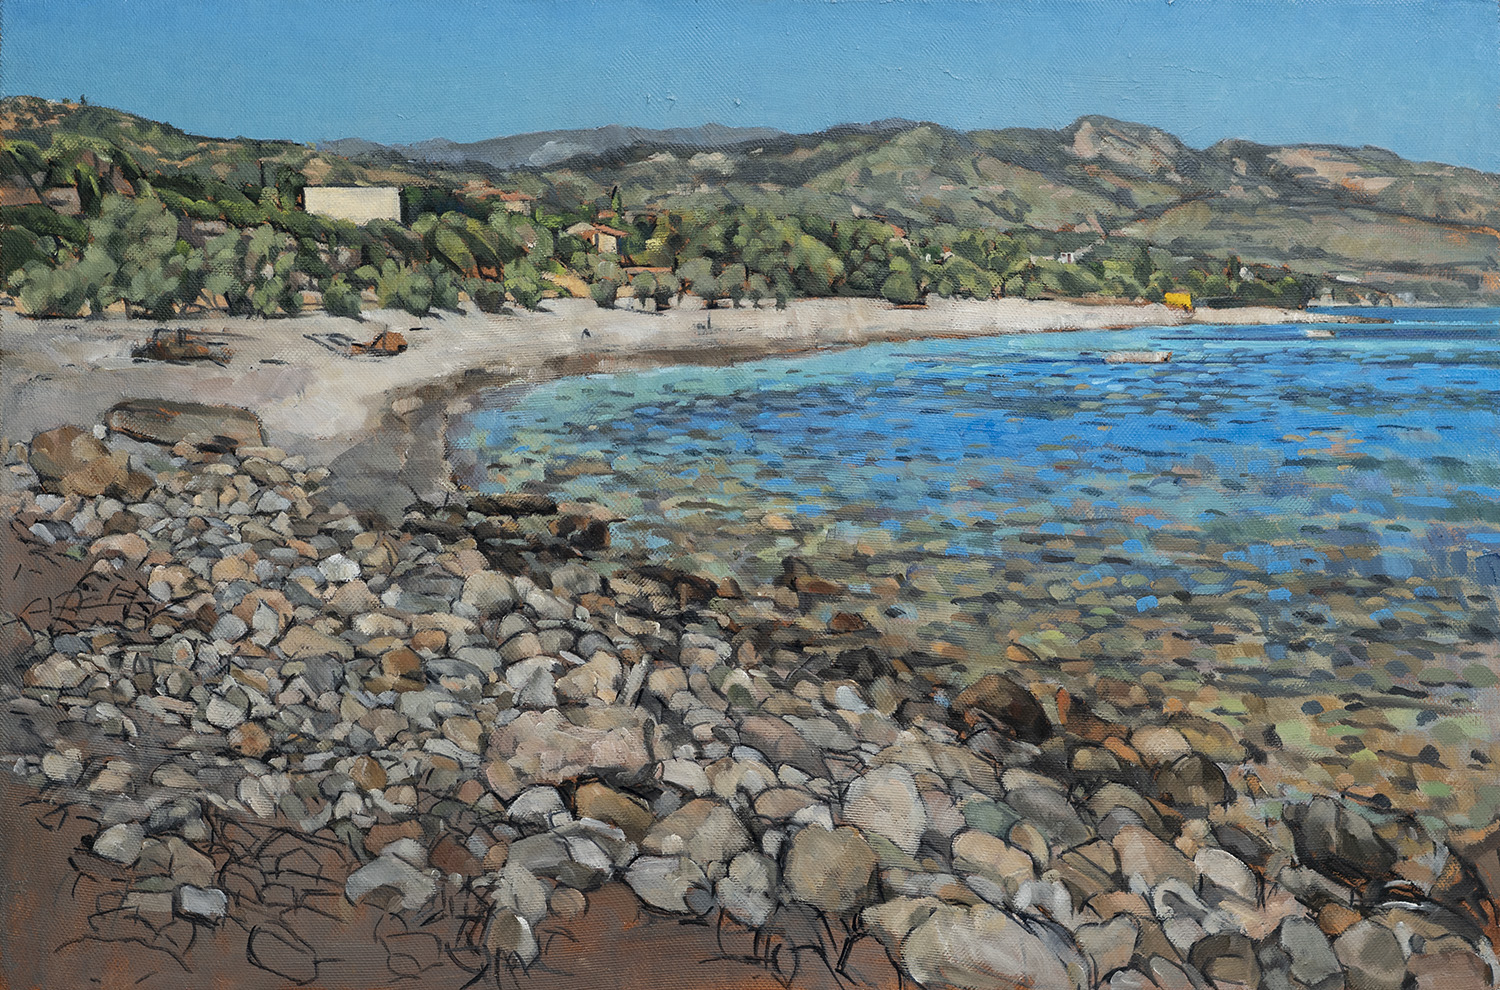 spro beach, Samos by Frederick Ortner (larger)